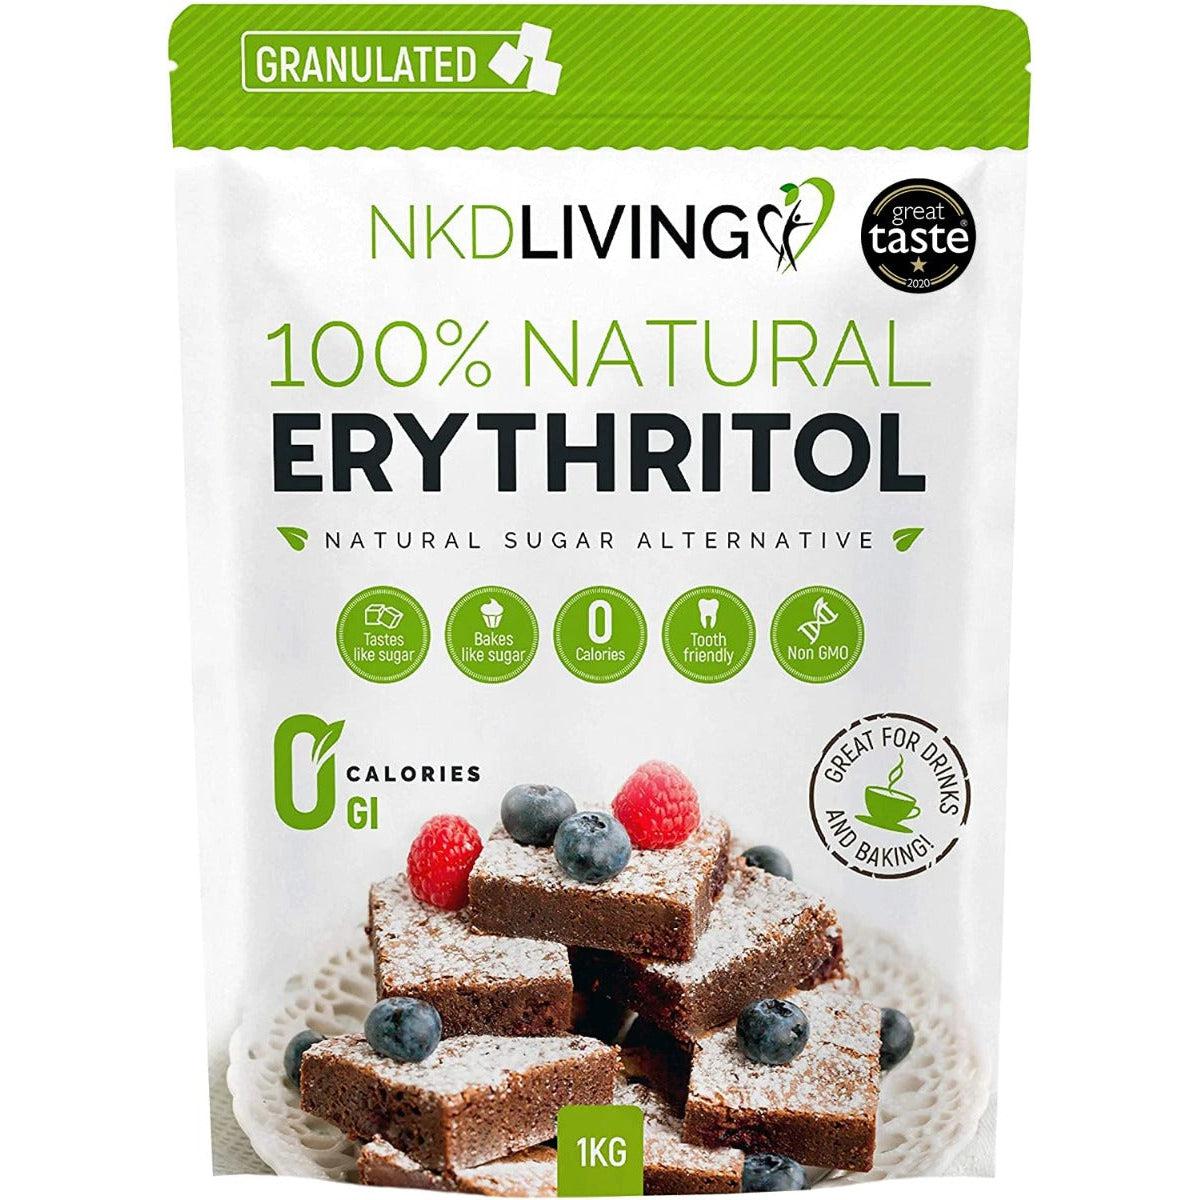 NKD Living 100% Natural Erythritol Natural Sugar Alternative Grandulated Keto Friendly 1KG - Expiry date 16/4/2024